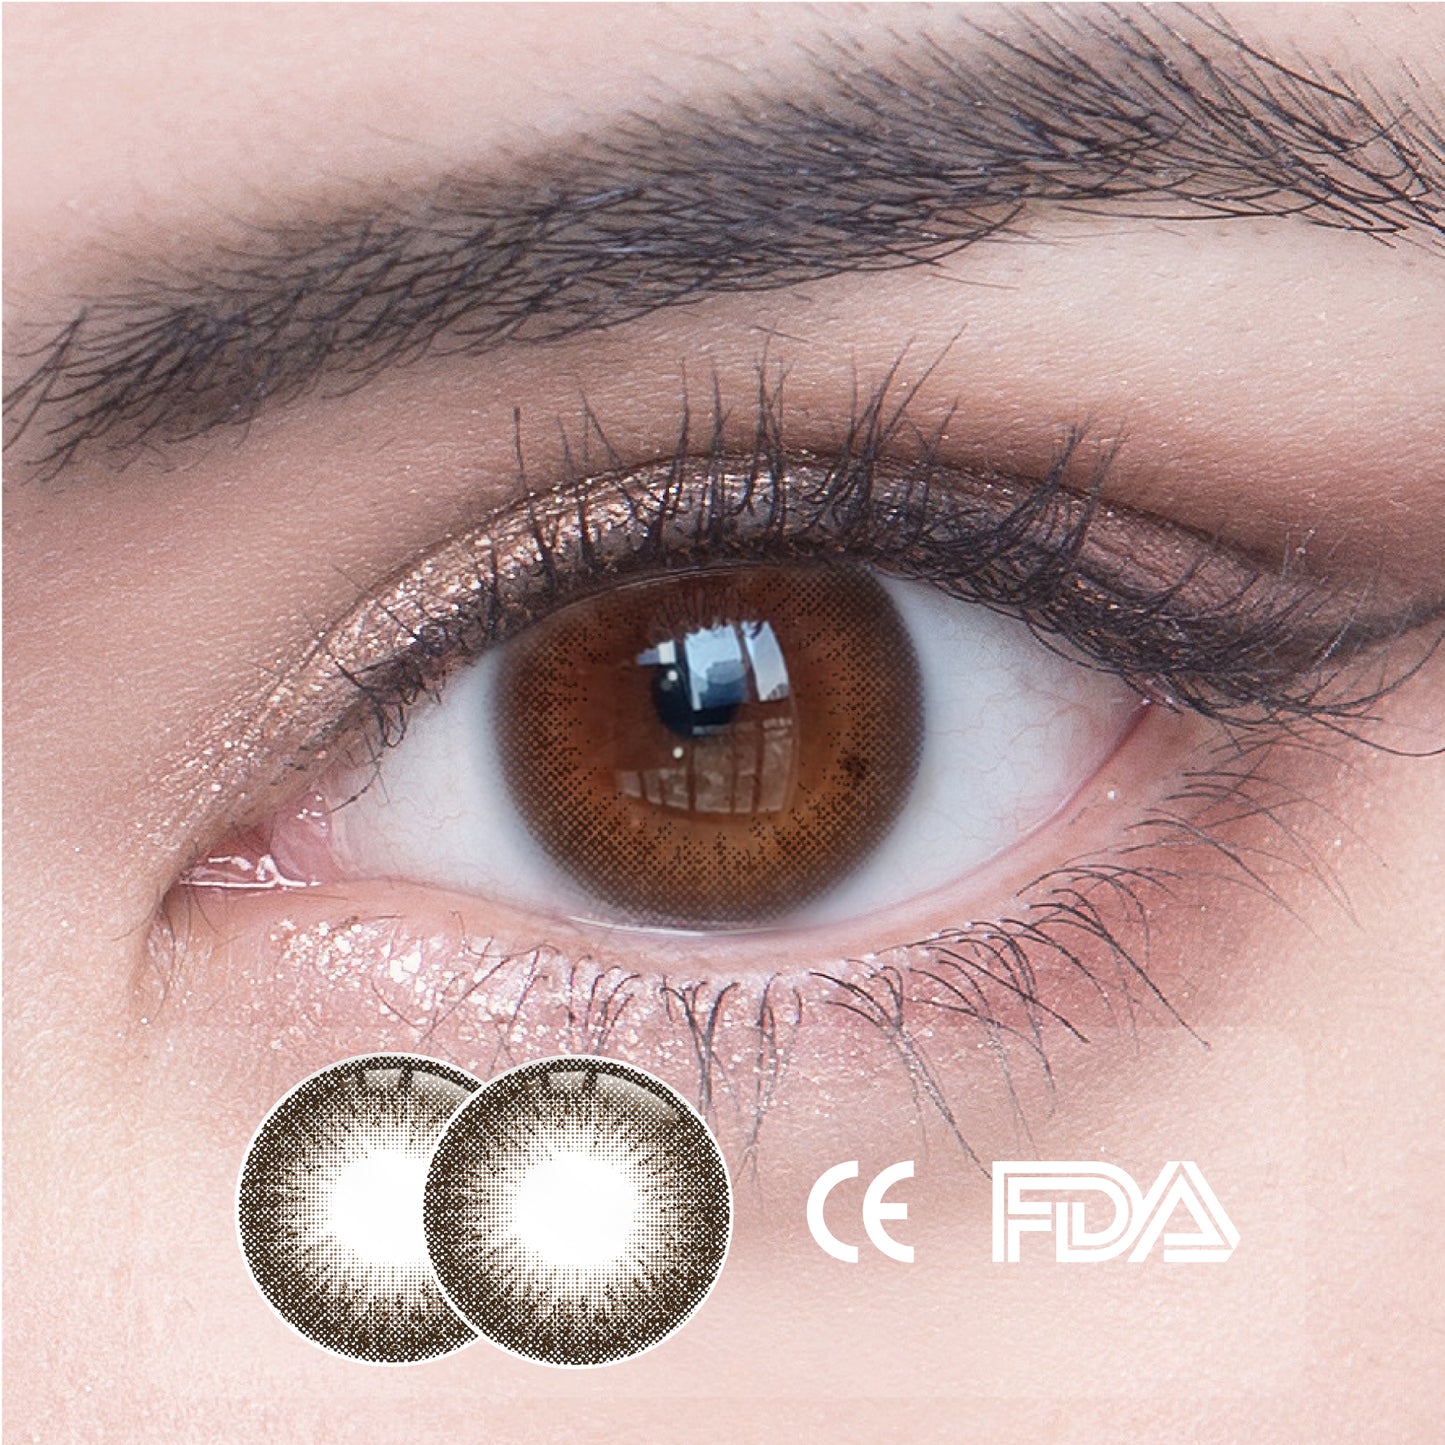 1pcs FDA Certificate Colorful Contact Lenses - Deep Brown